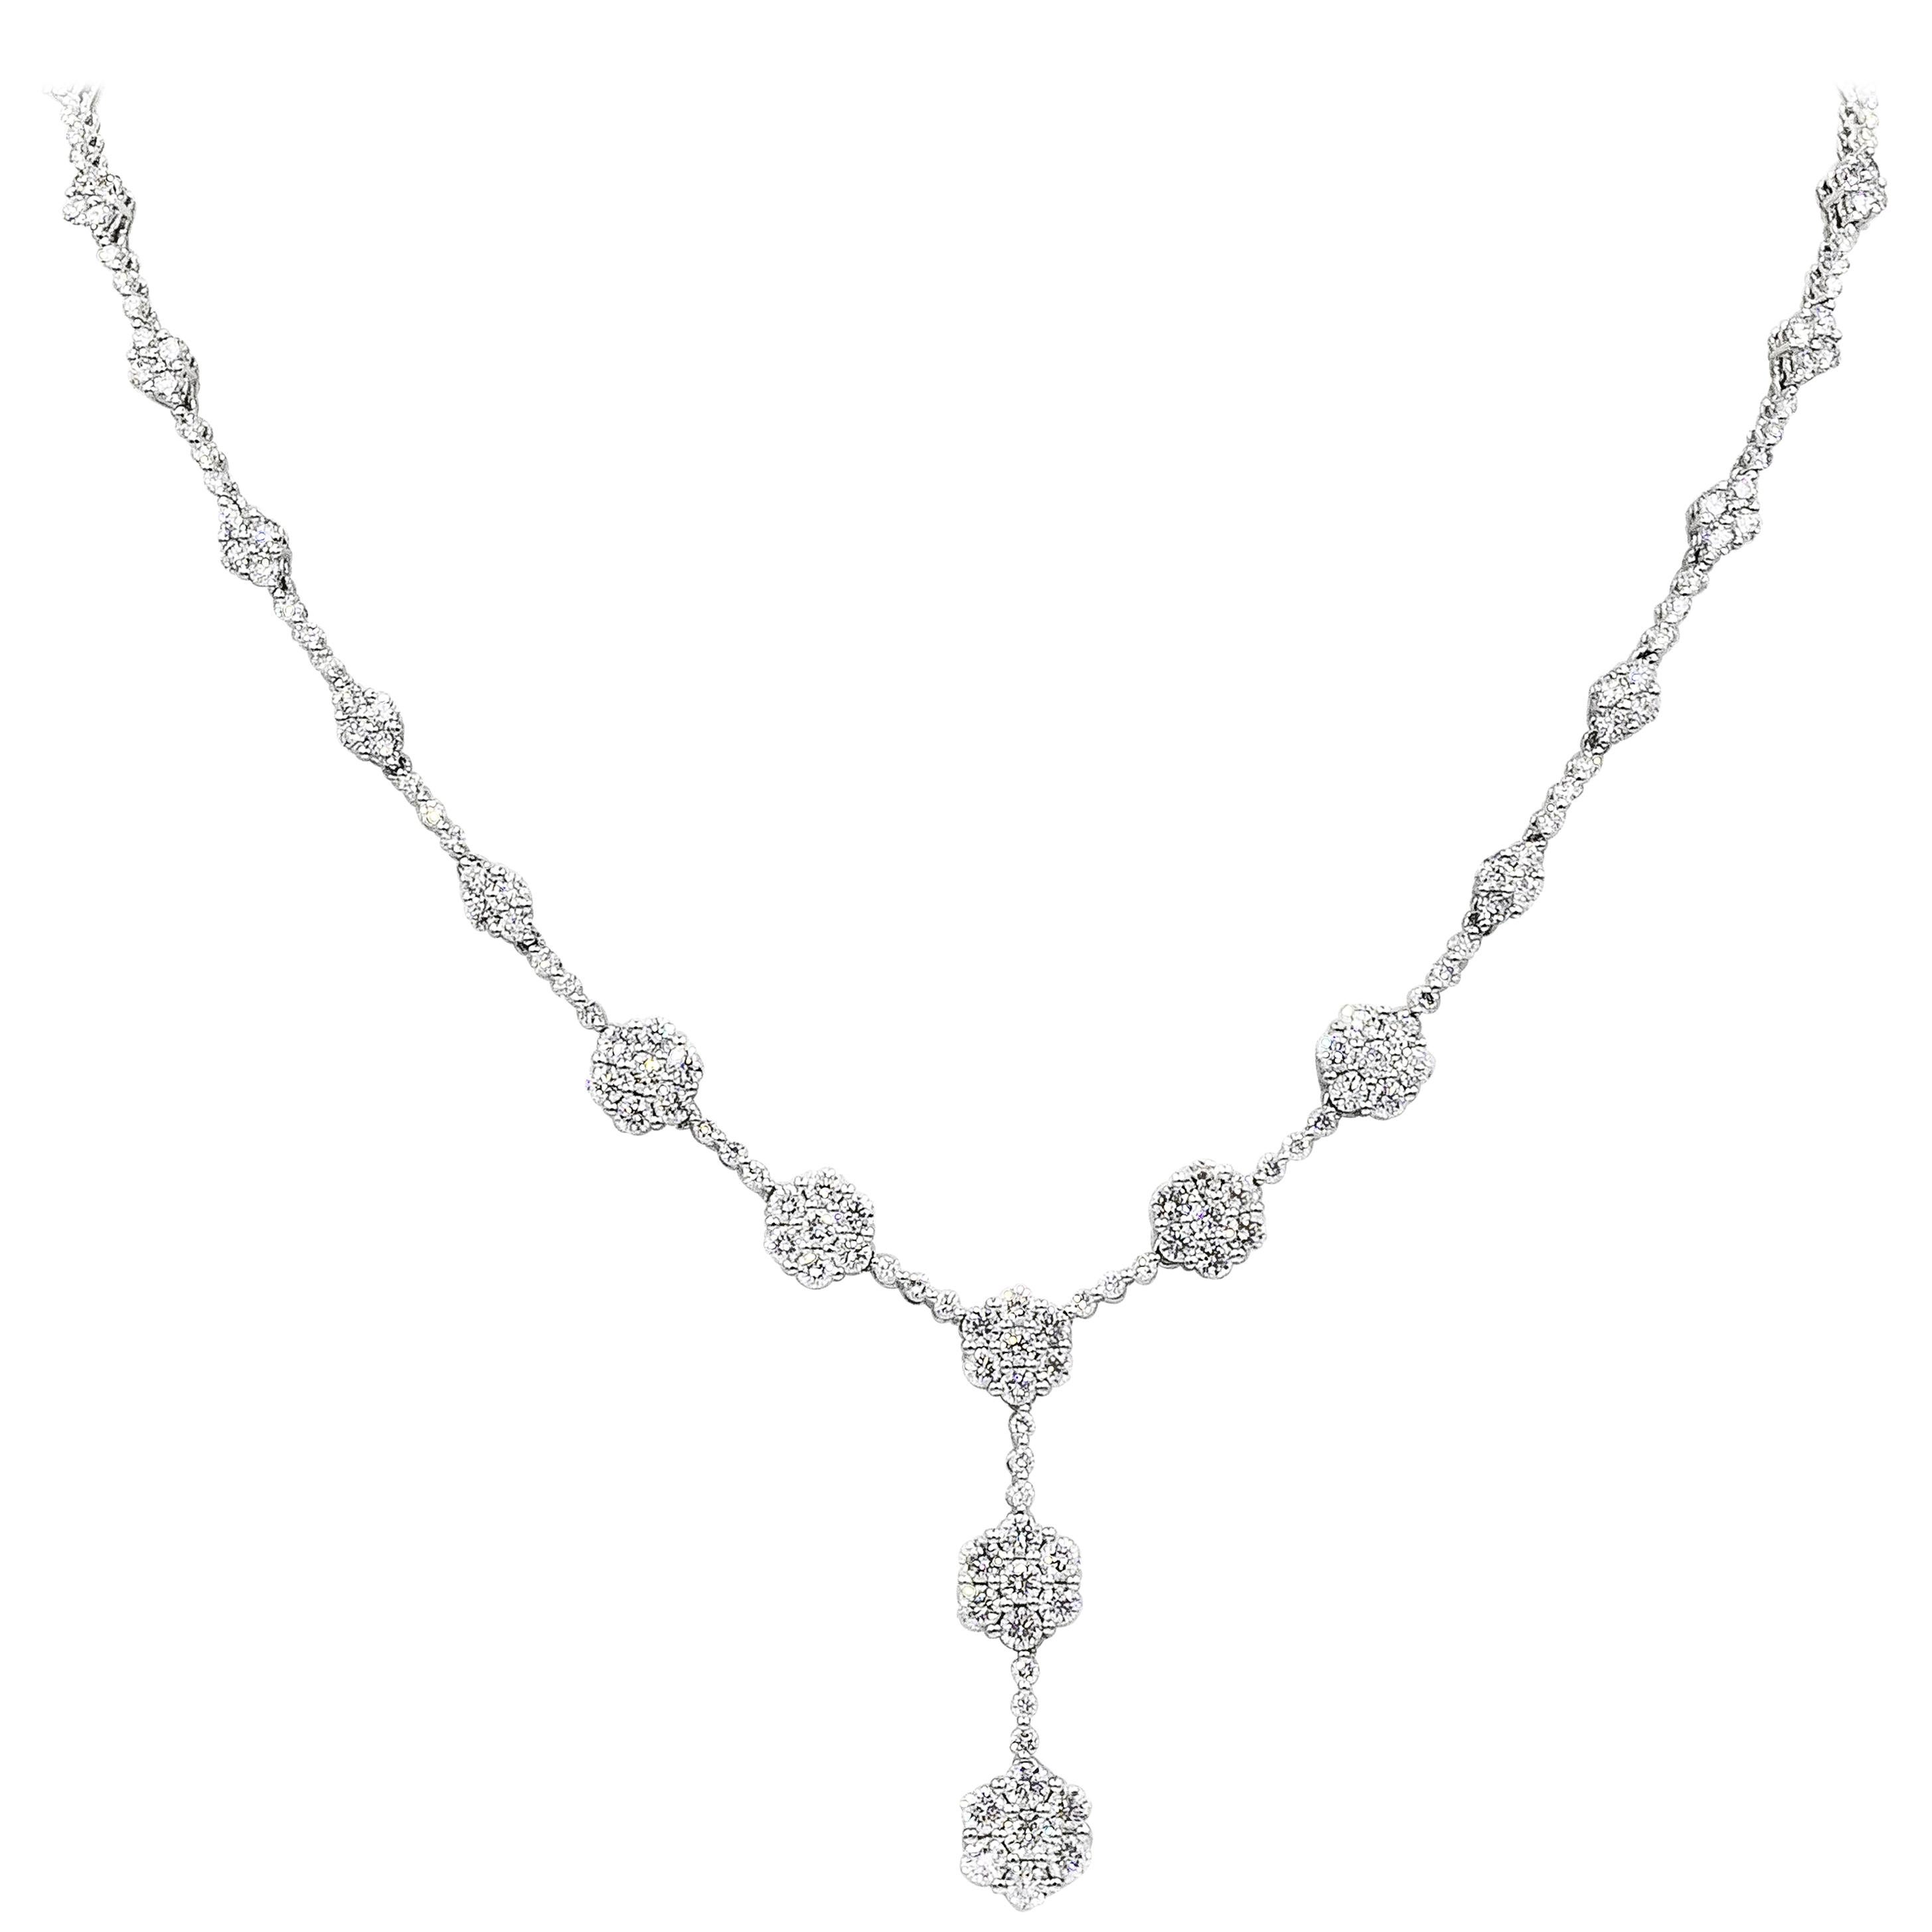 10.14 Carats Total Brilliant Round Diamond Cluster Floral-Motif Fashion Necklace